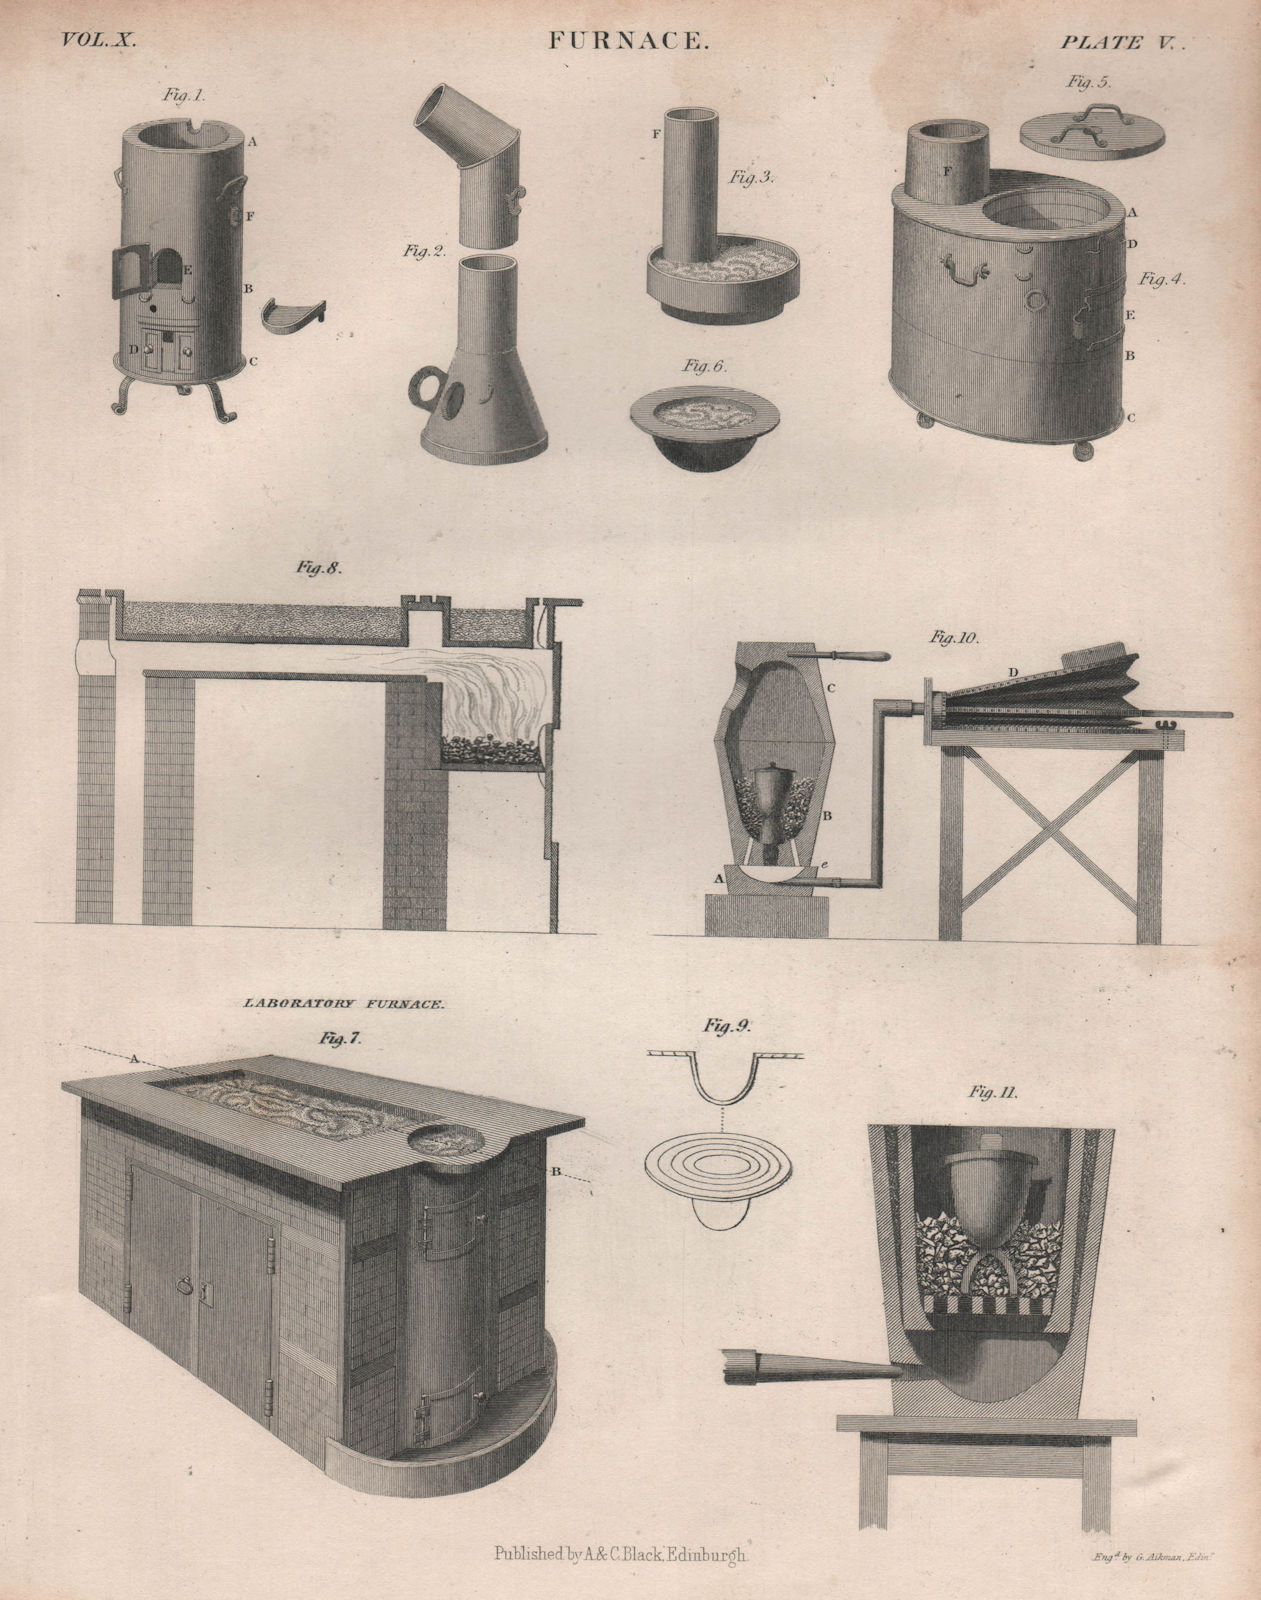 Associate Product FURNACES. Designs. Laboratory Furnace. BRITANNICA 1860 old antique print